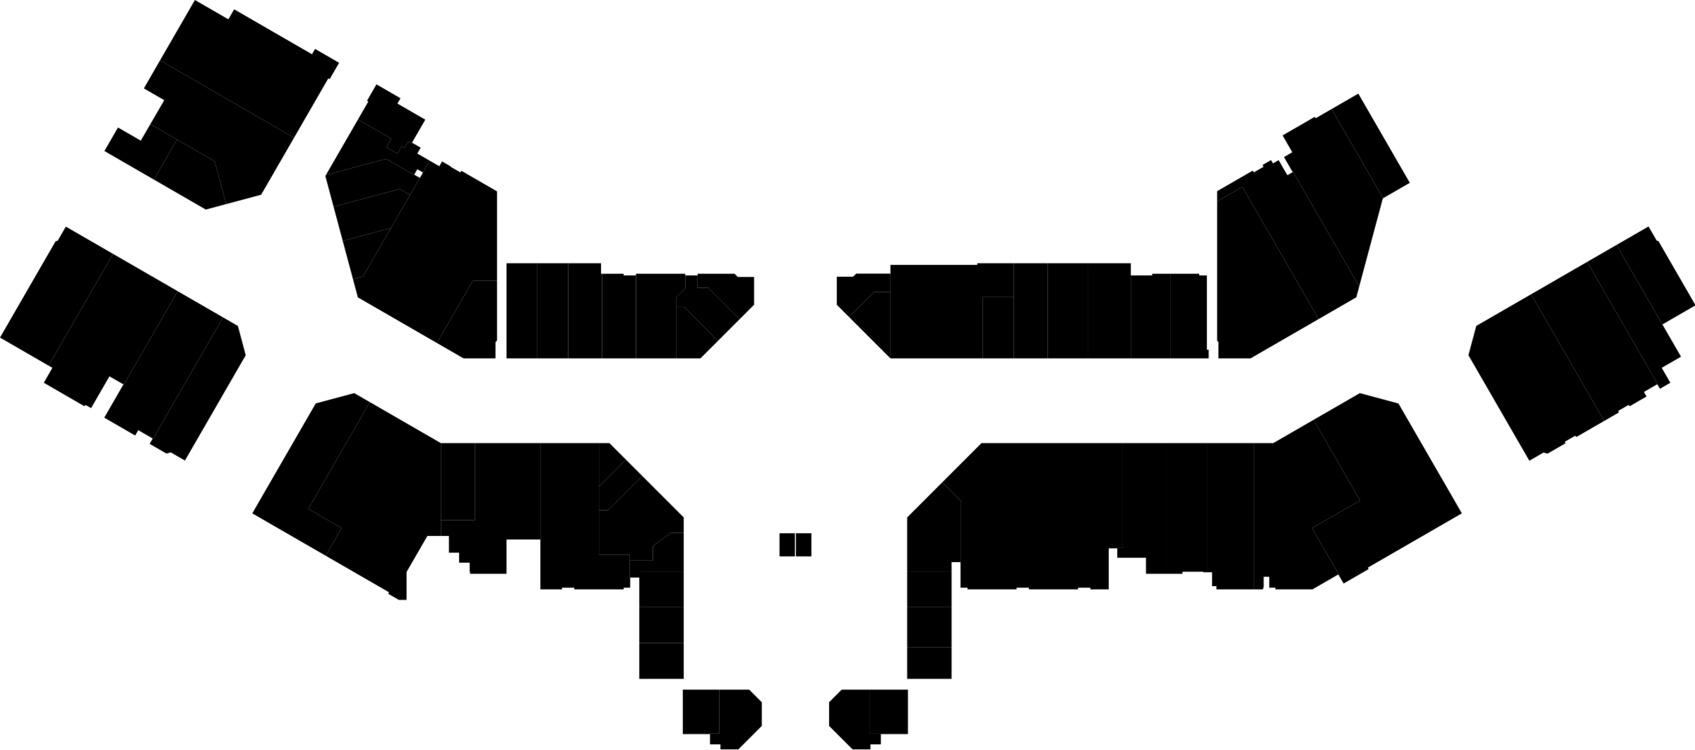 Silhouette,Logo,Monochrome